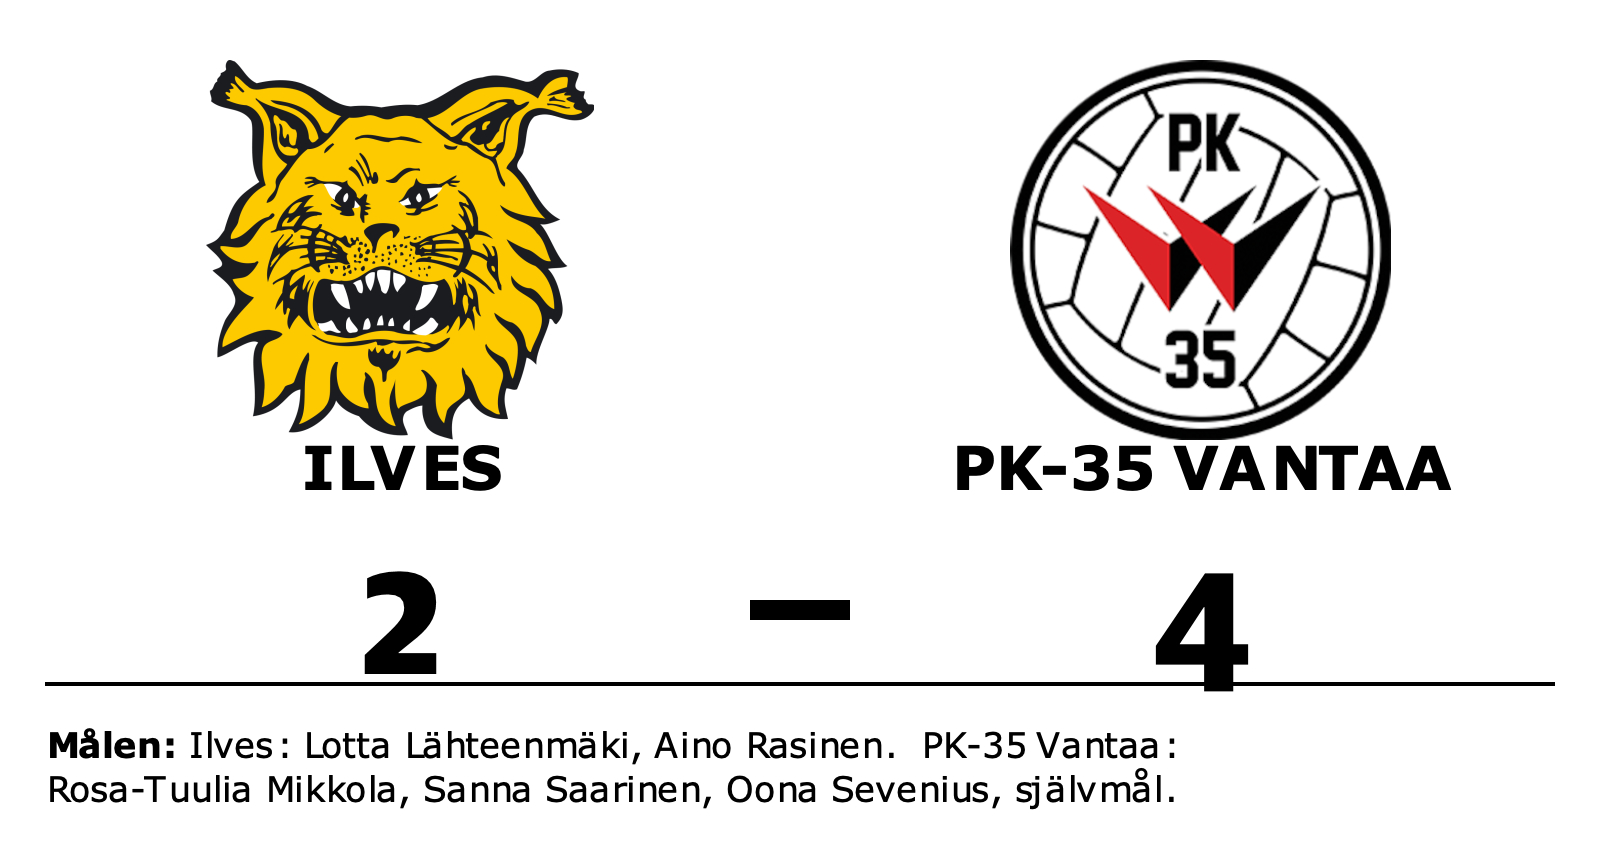 Ilves förlorade mot PK-35 Vantaa